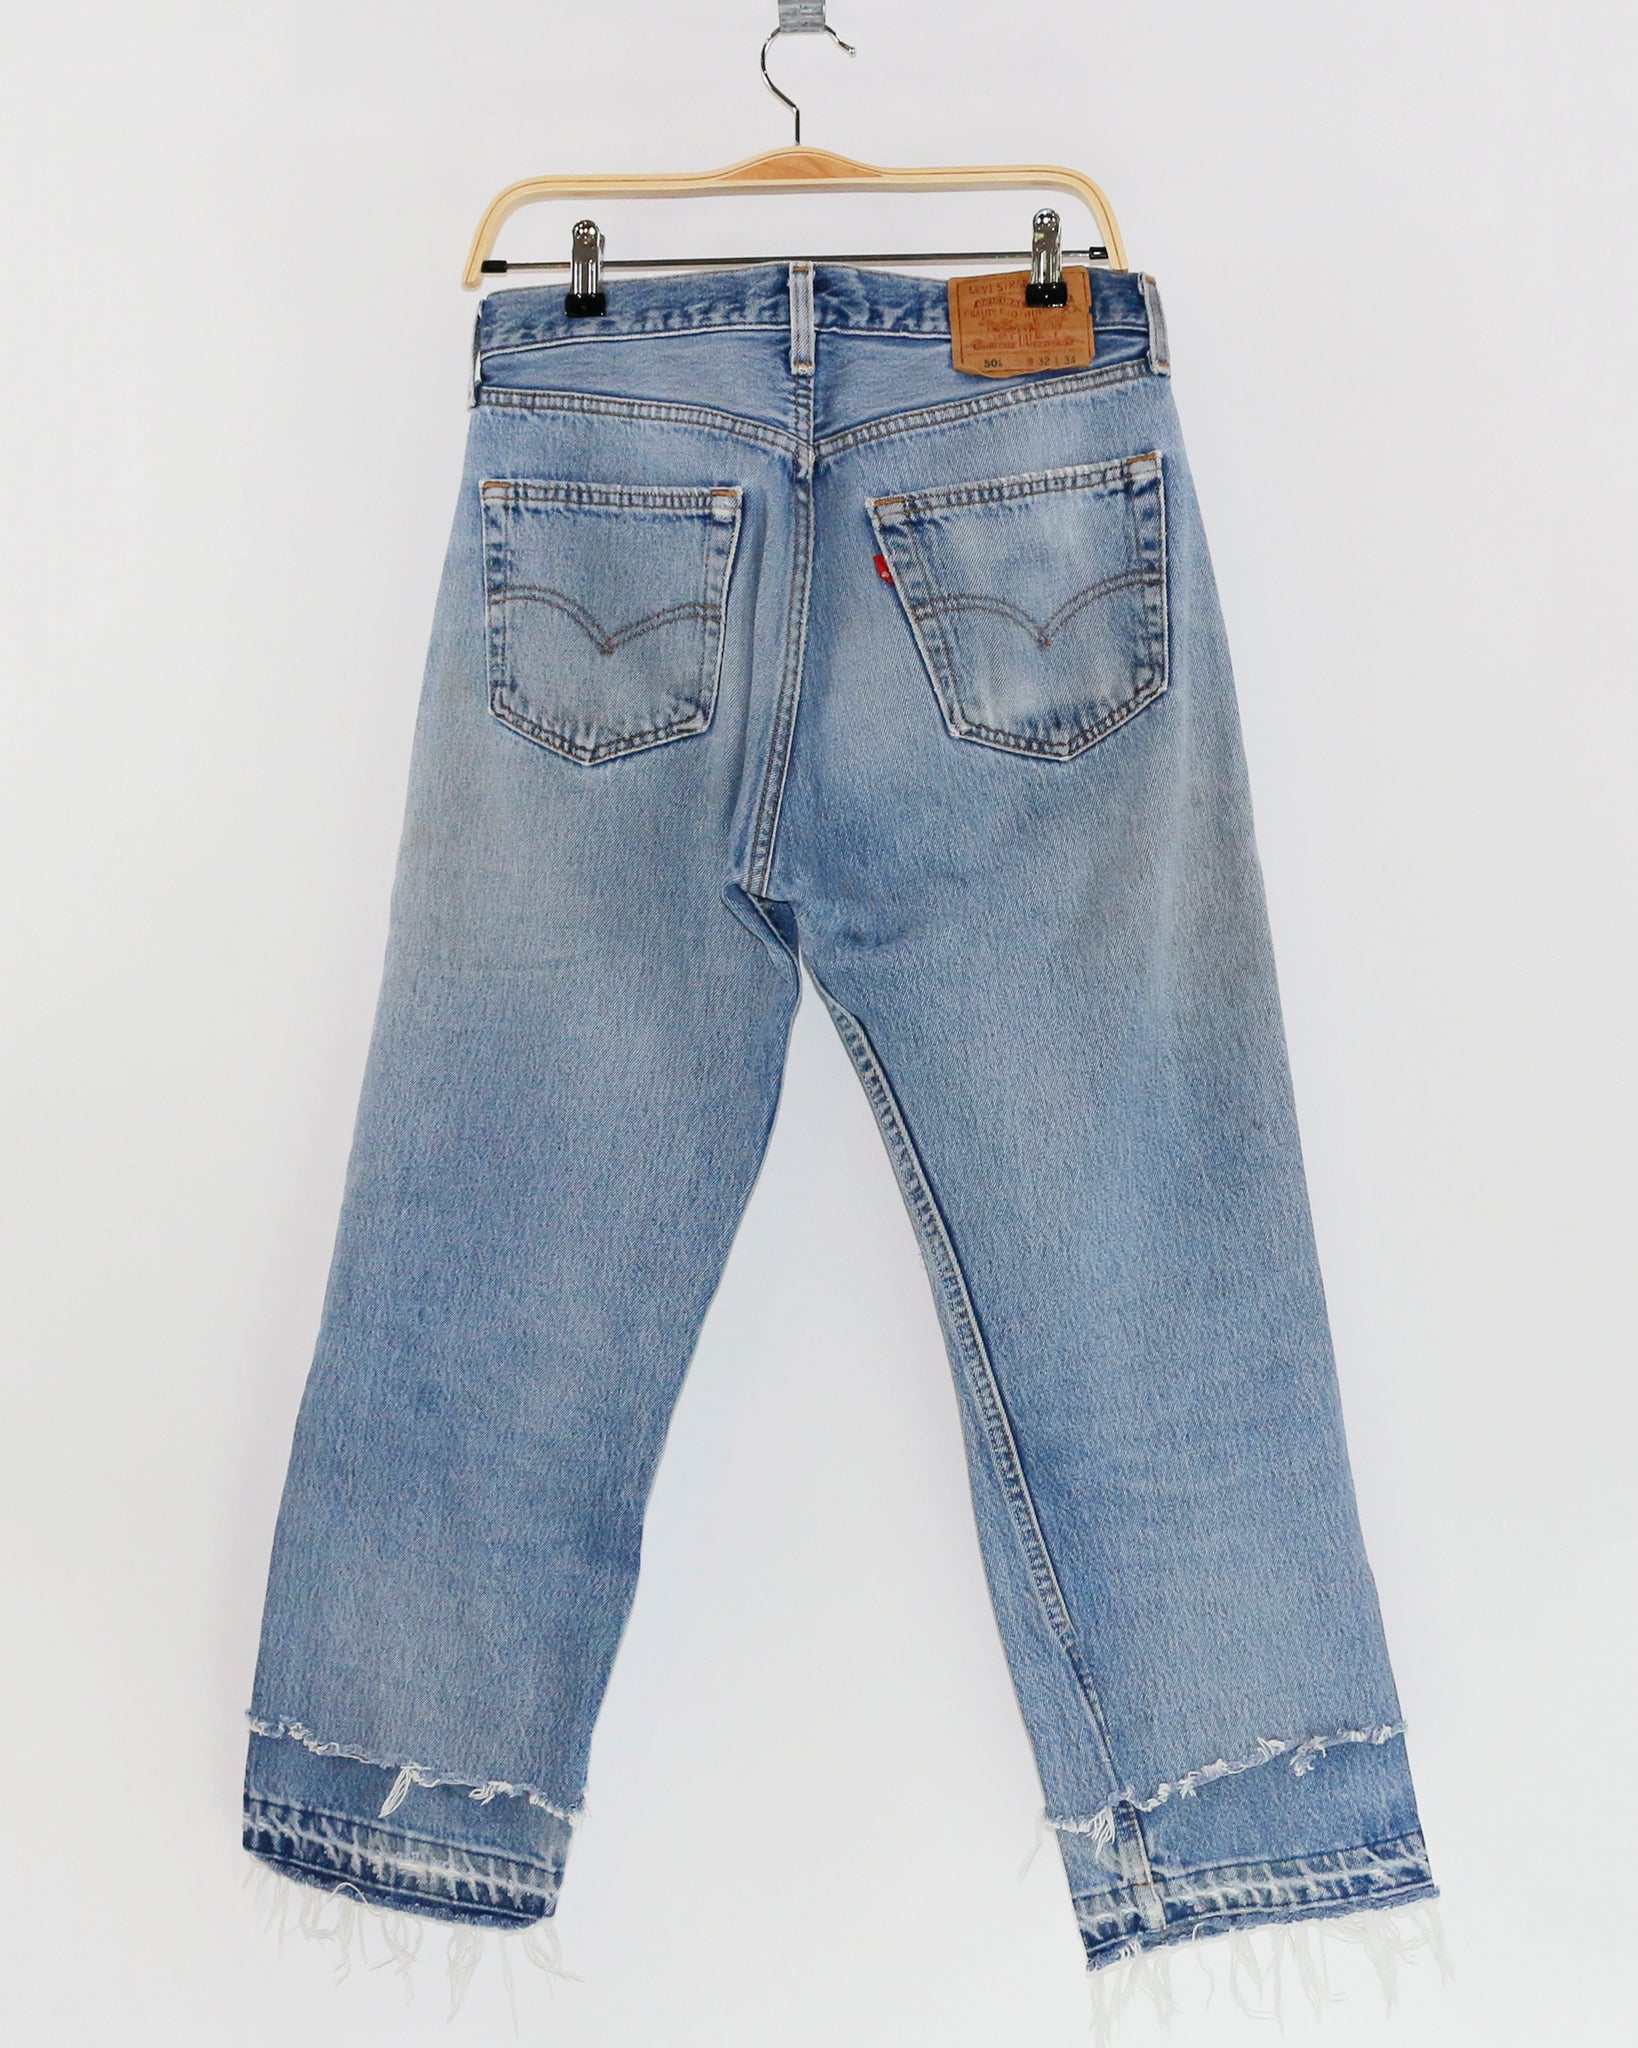 Vintage Levi's 501, Peek-a-Boo Jeans, fit as women's size 30 – kabanplus